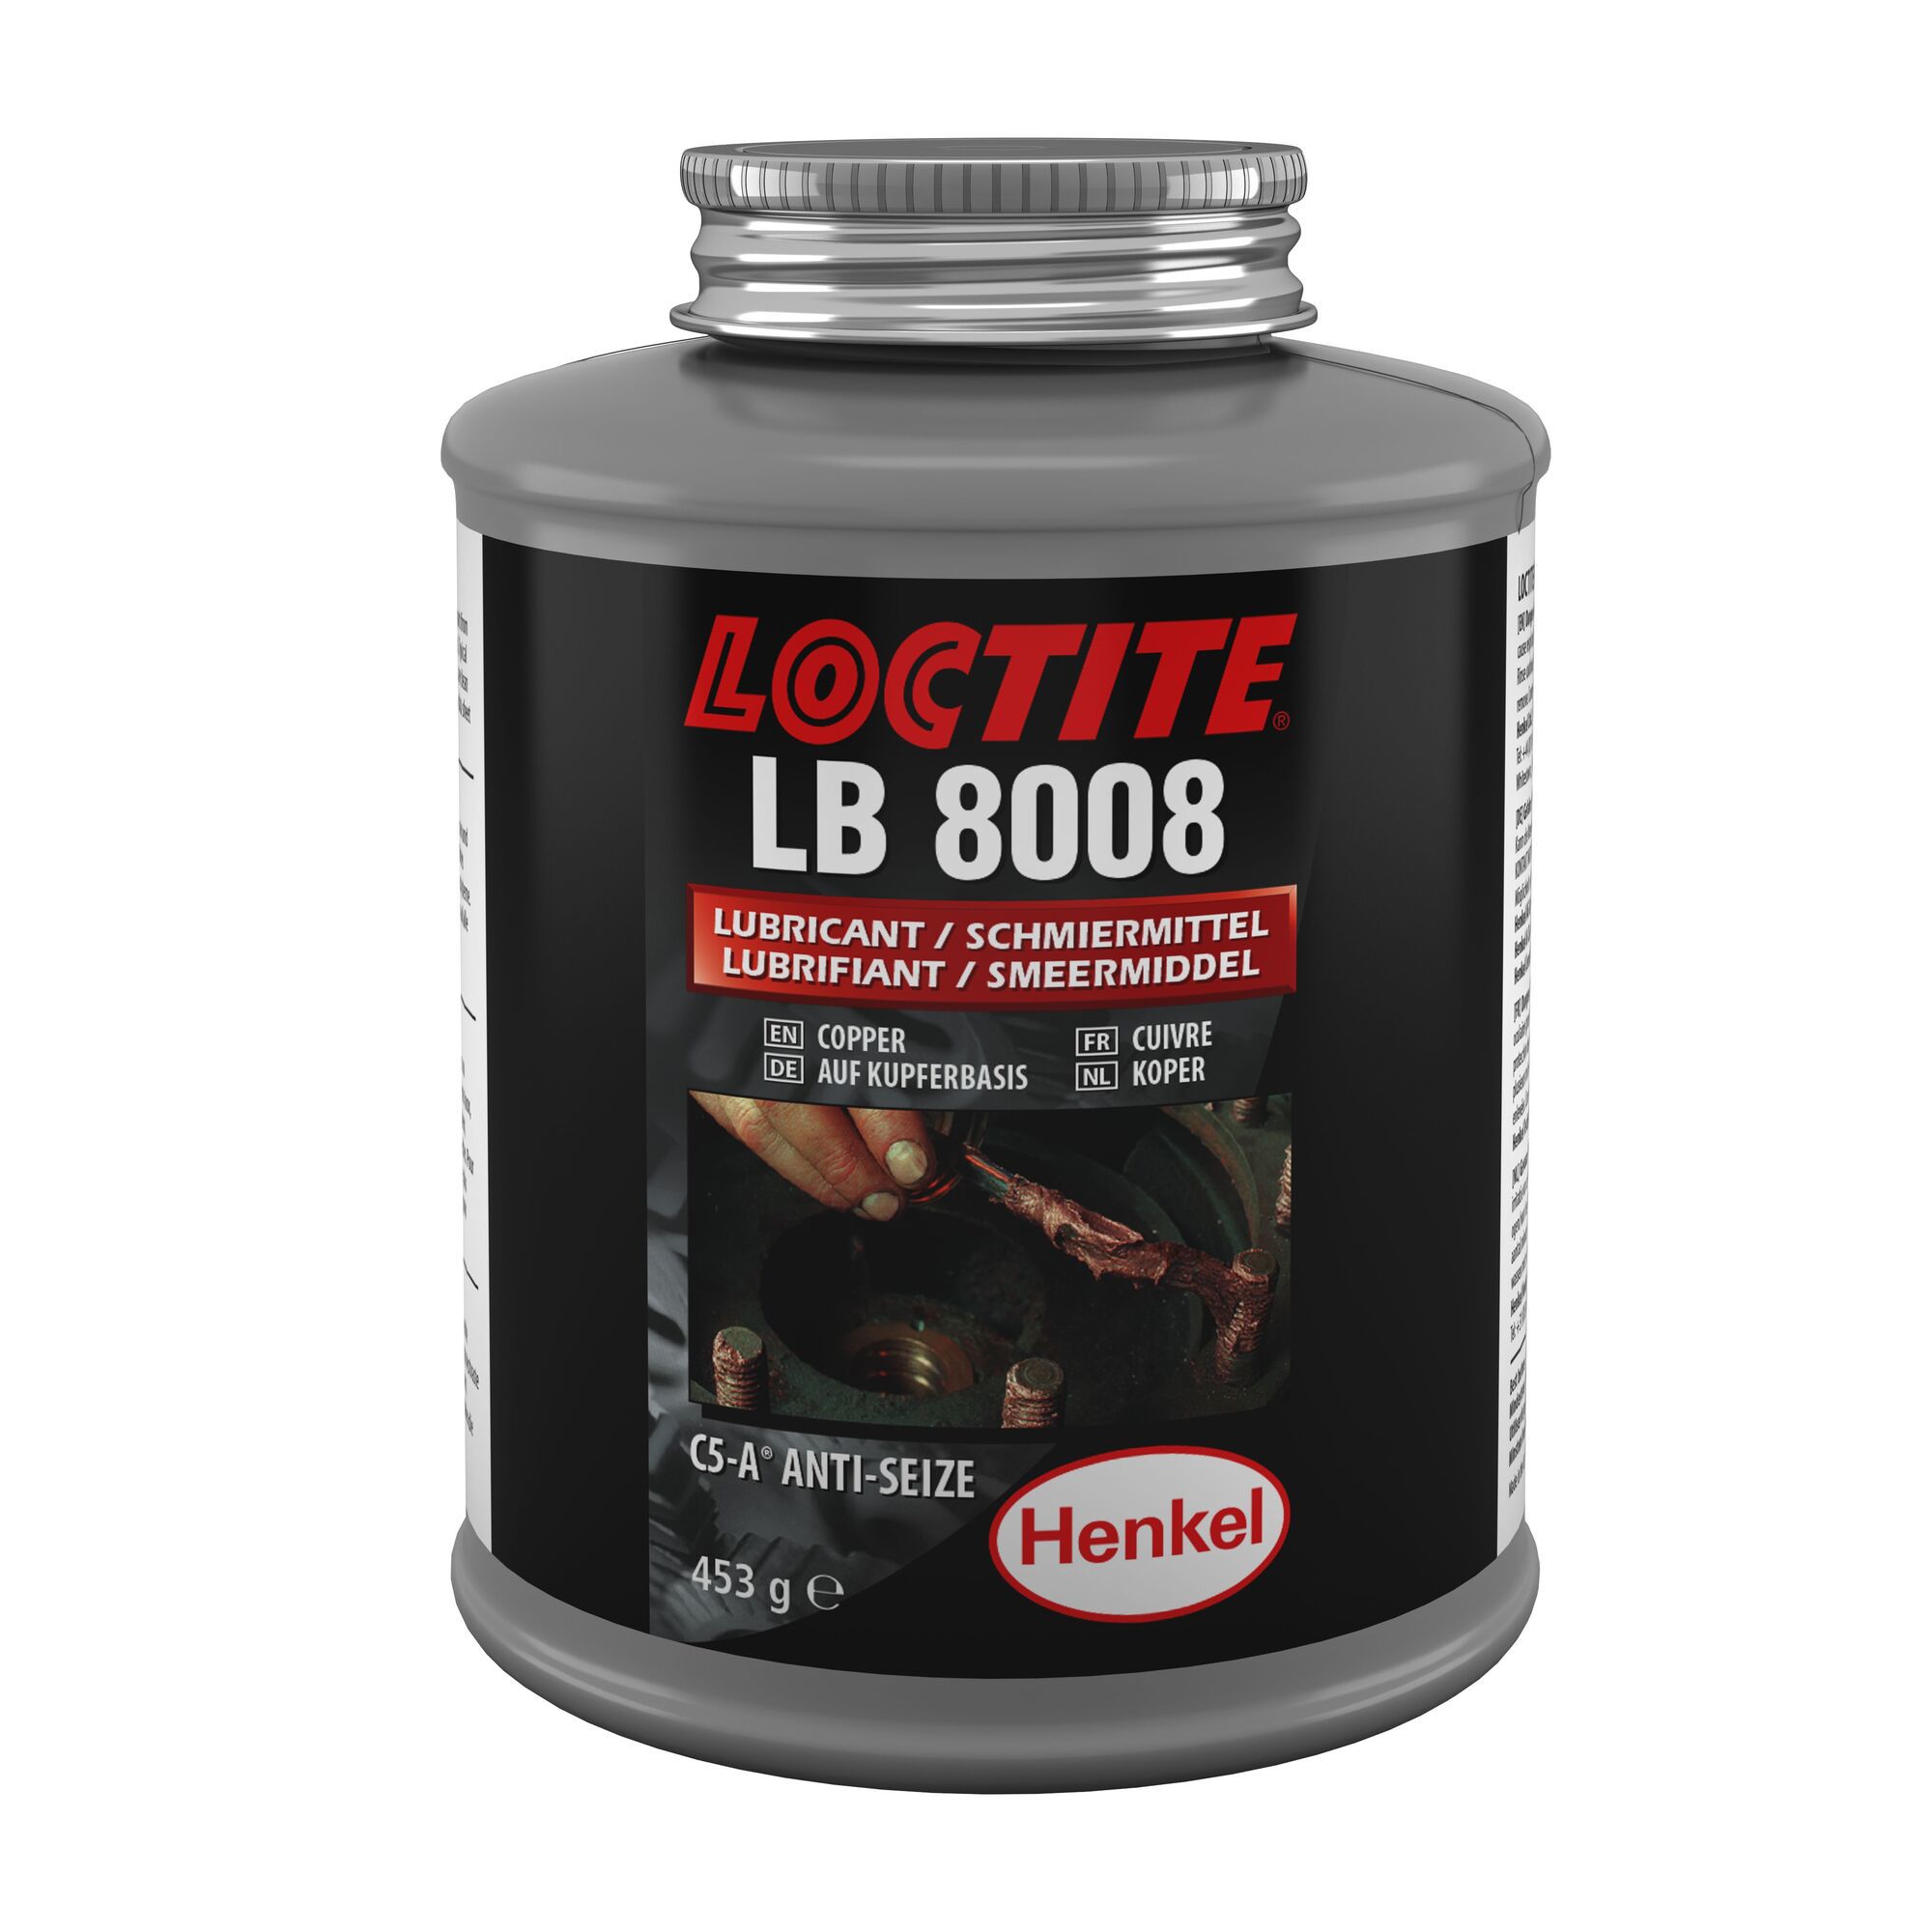 LOCTITE LB 8008 C5-A 453G EGFD